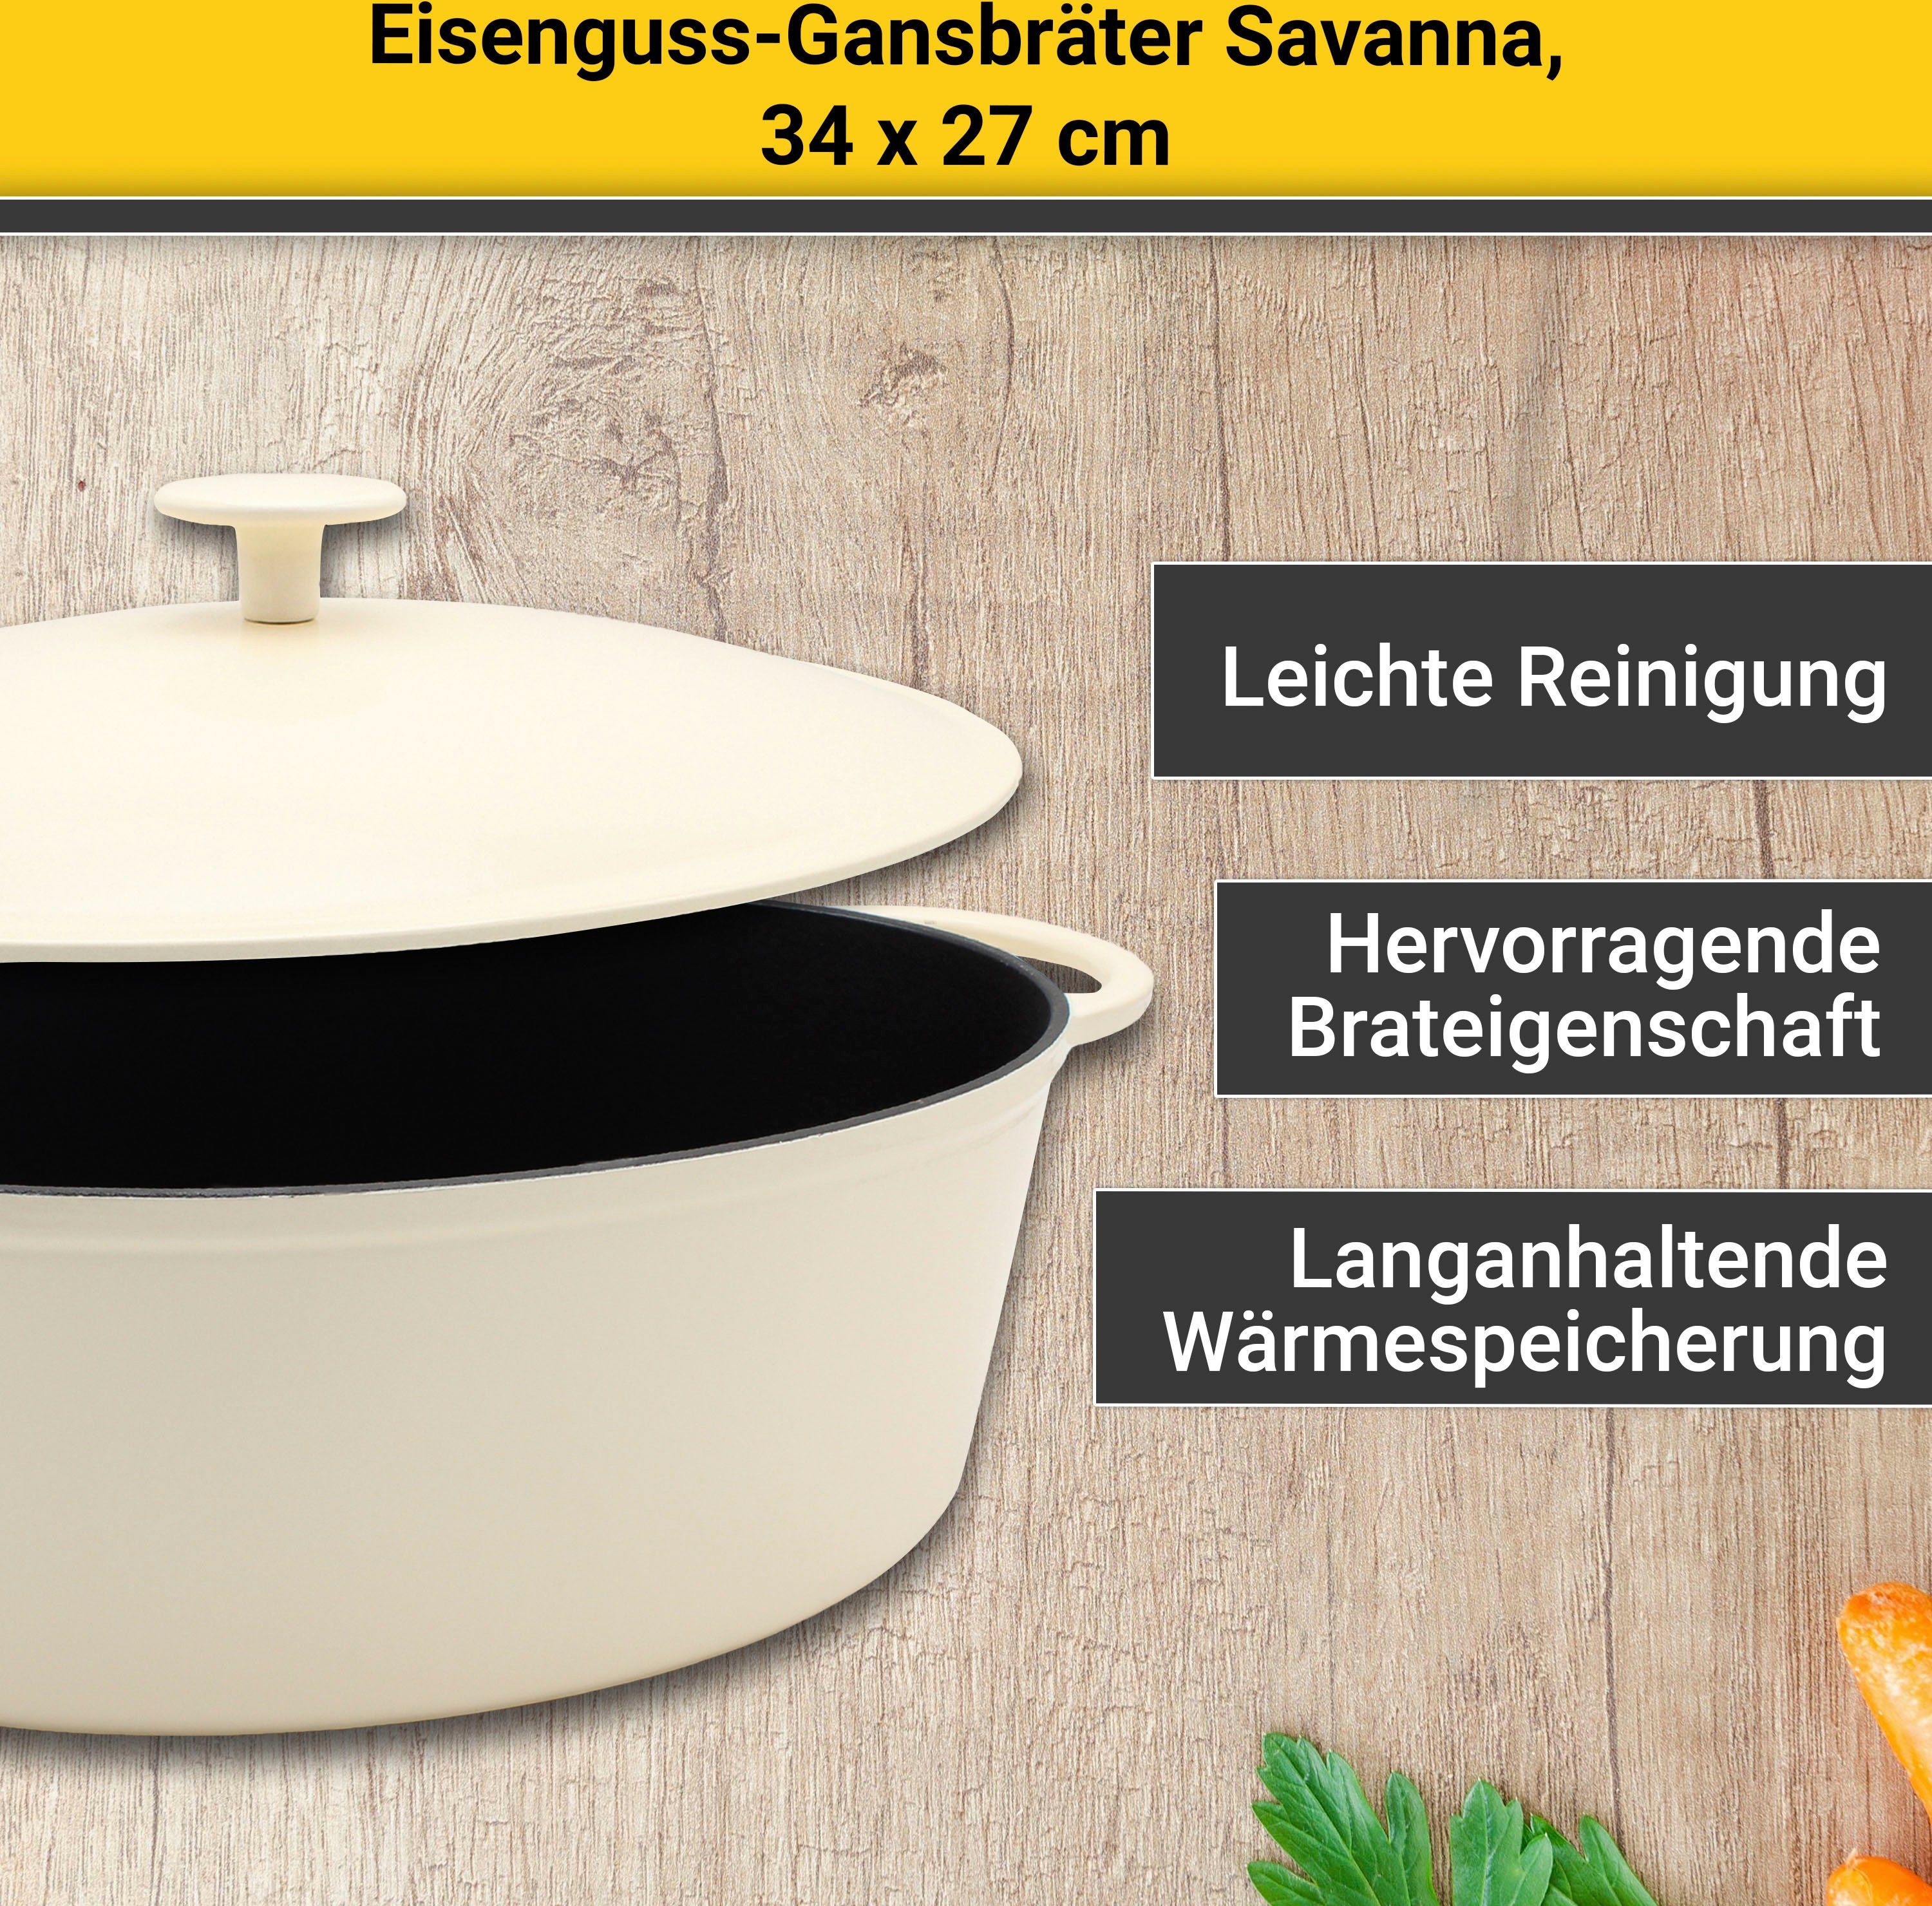 Eisenguss, Induktion Bräter Krüger oval, 7,5 Liter, Savanna,